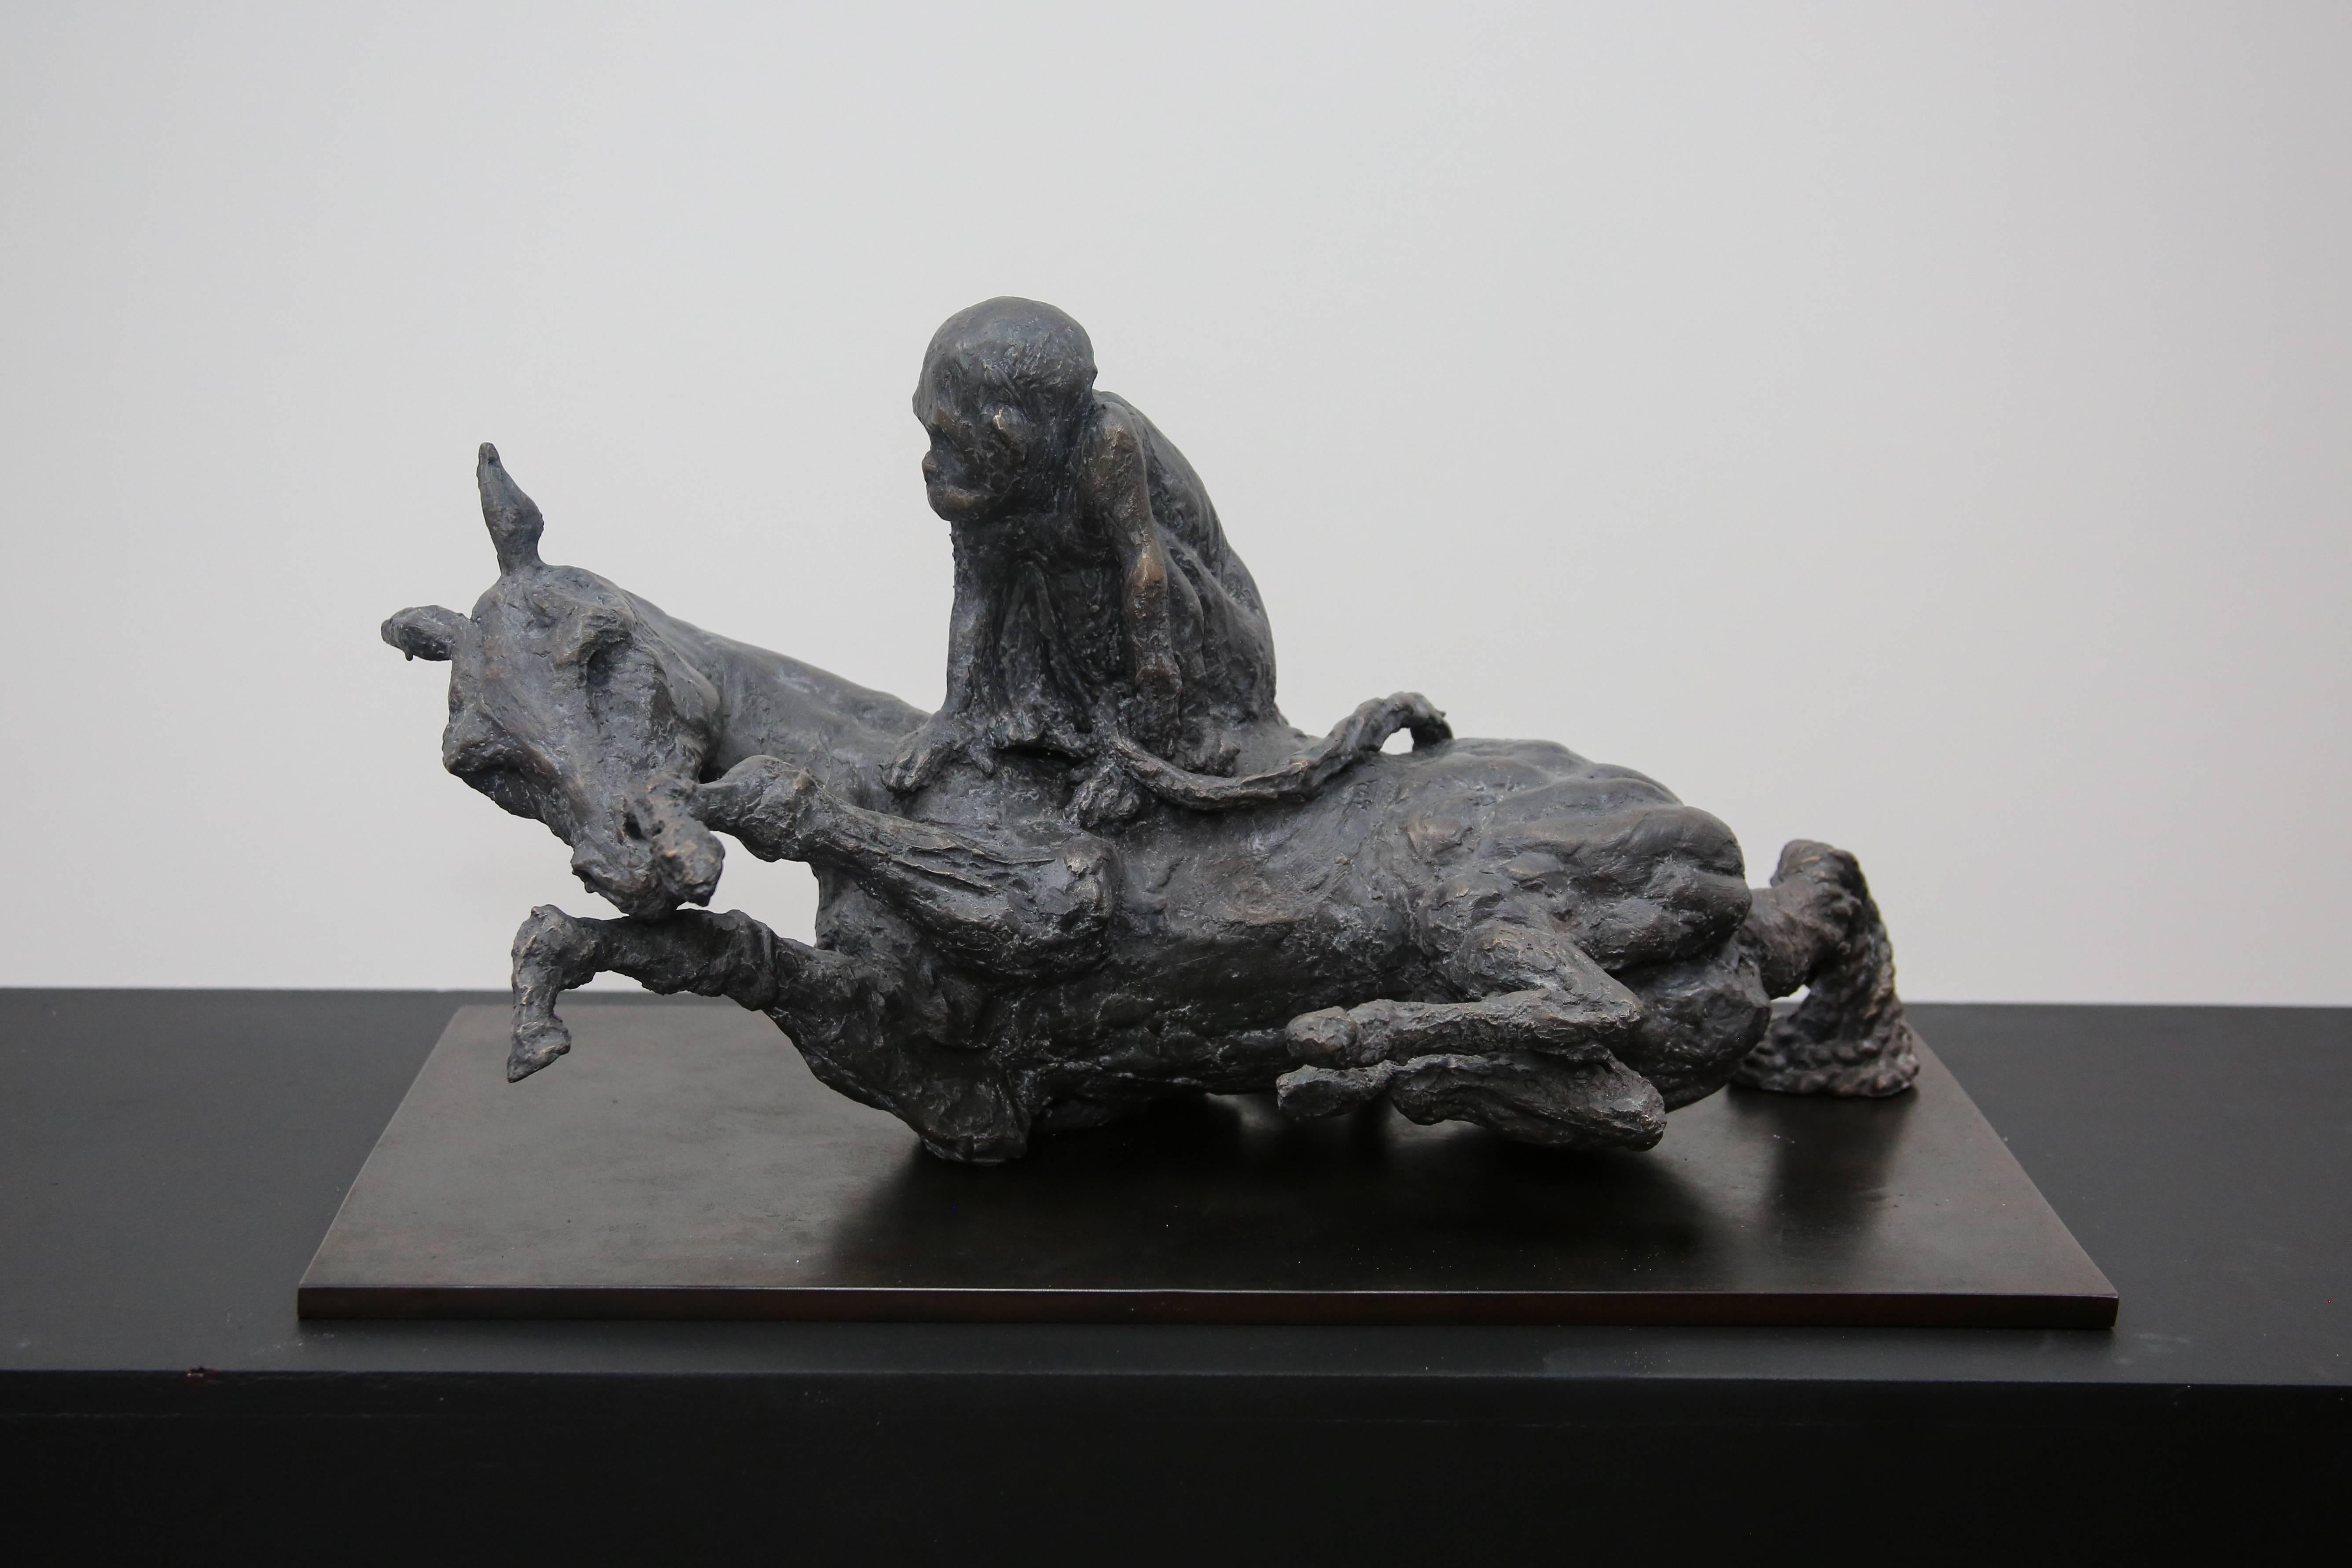 Beth Carter Figurative Sculpture - Monkey and Horse, bronze sculpture